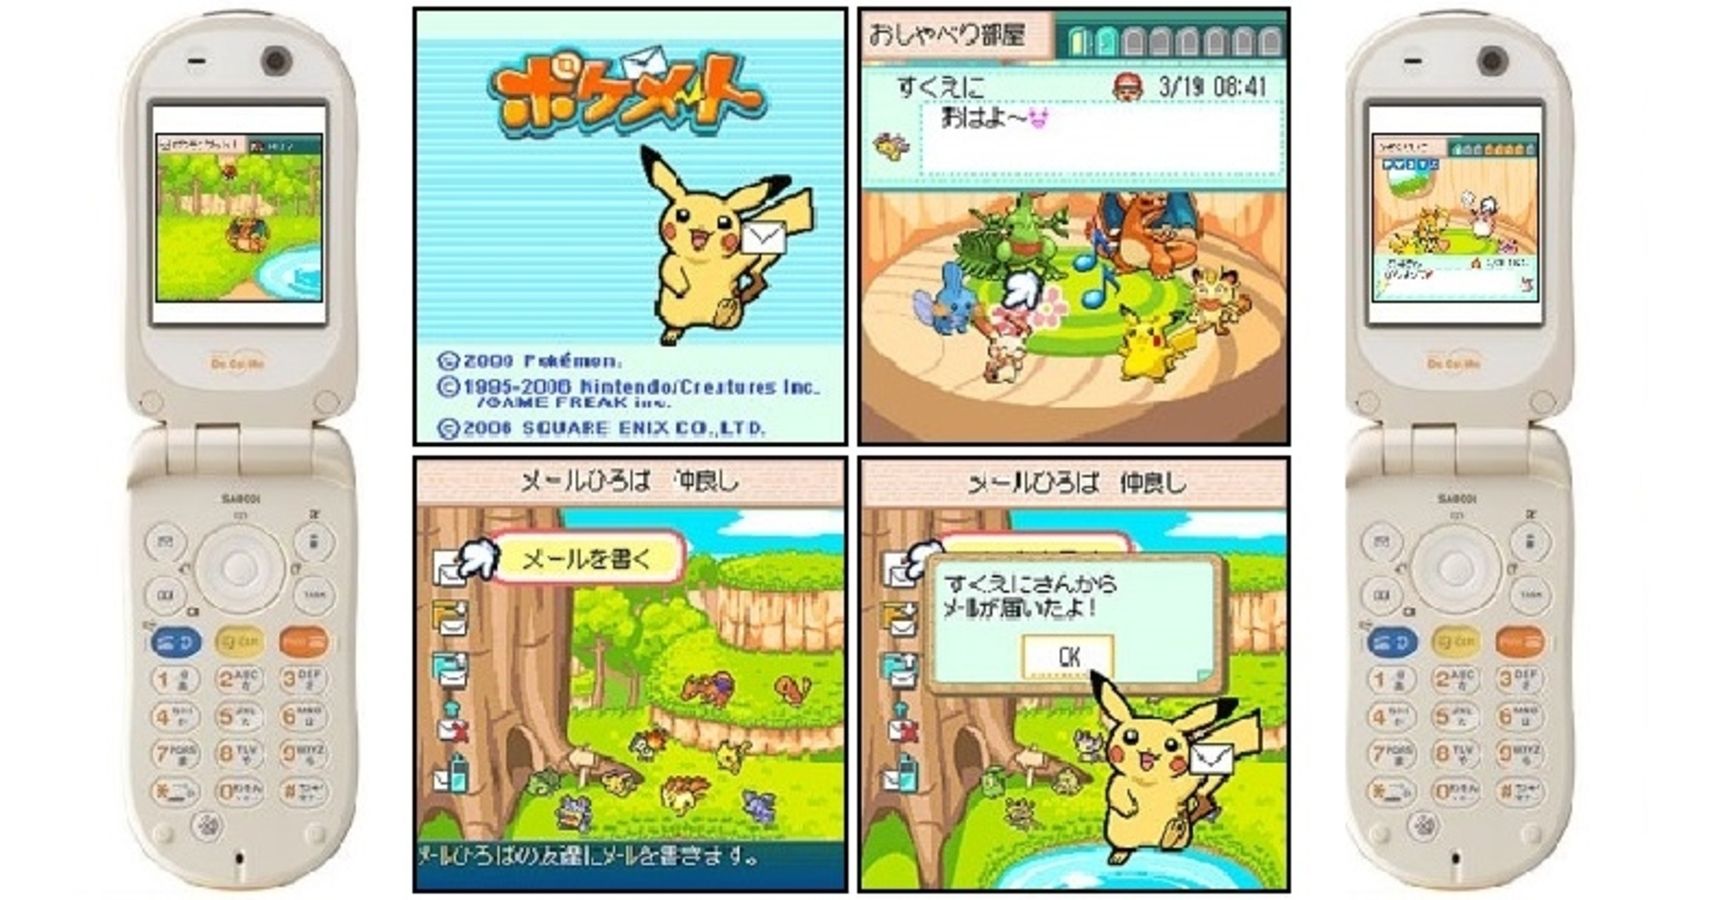 Before Pokémon Go There Was Pokémate